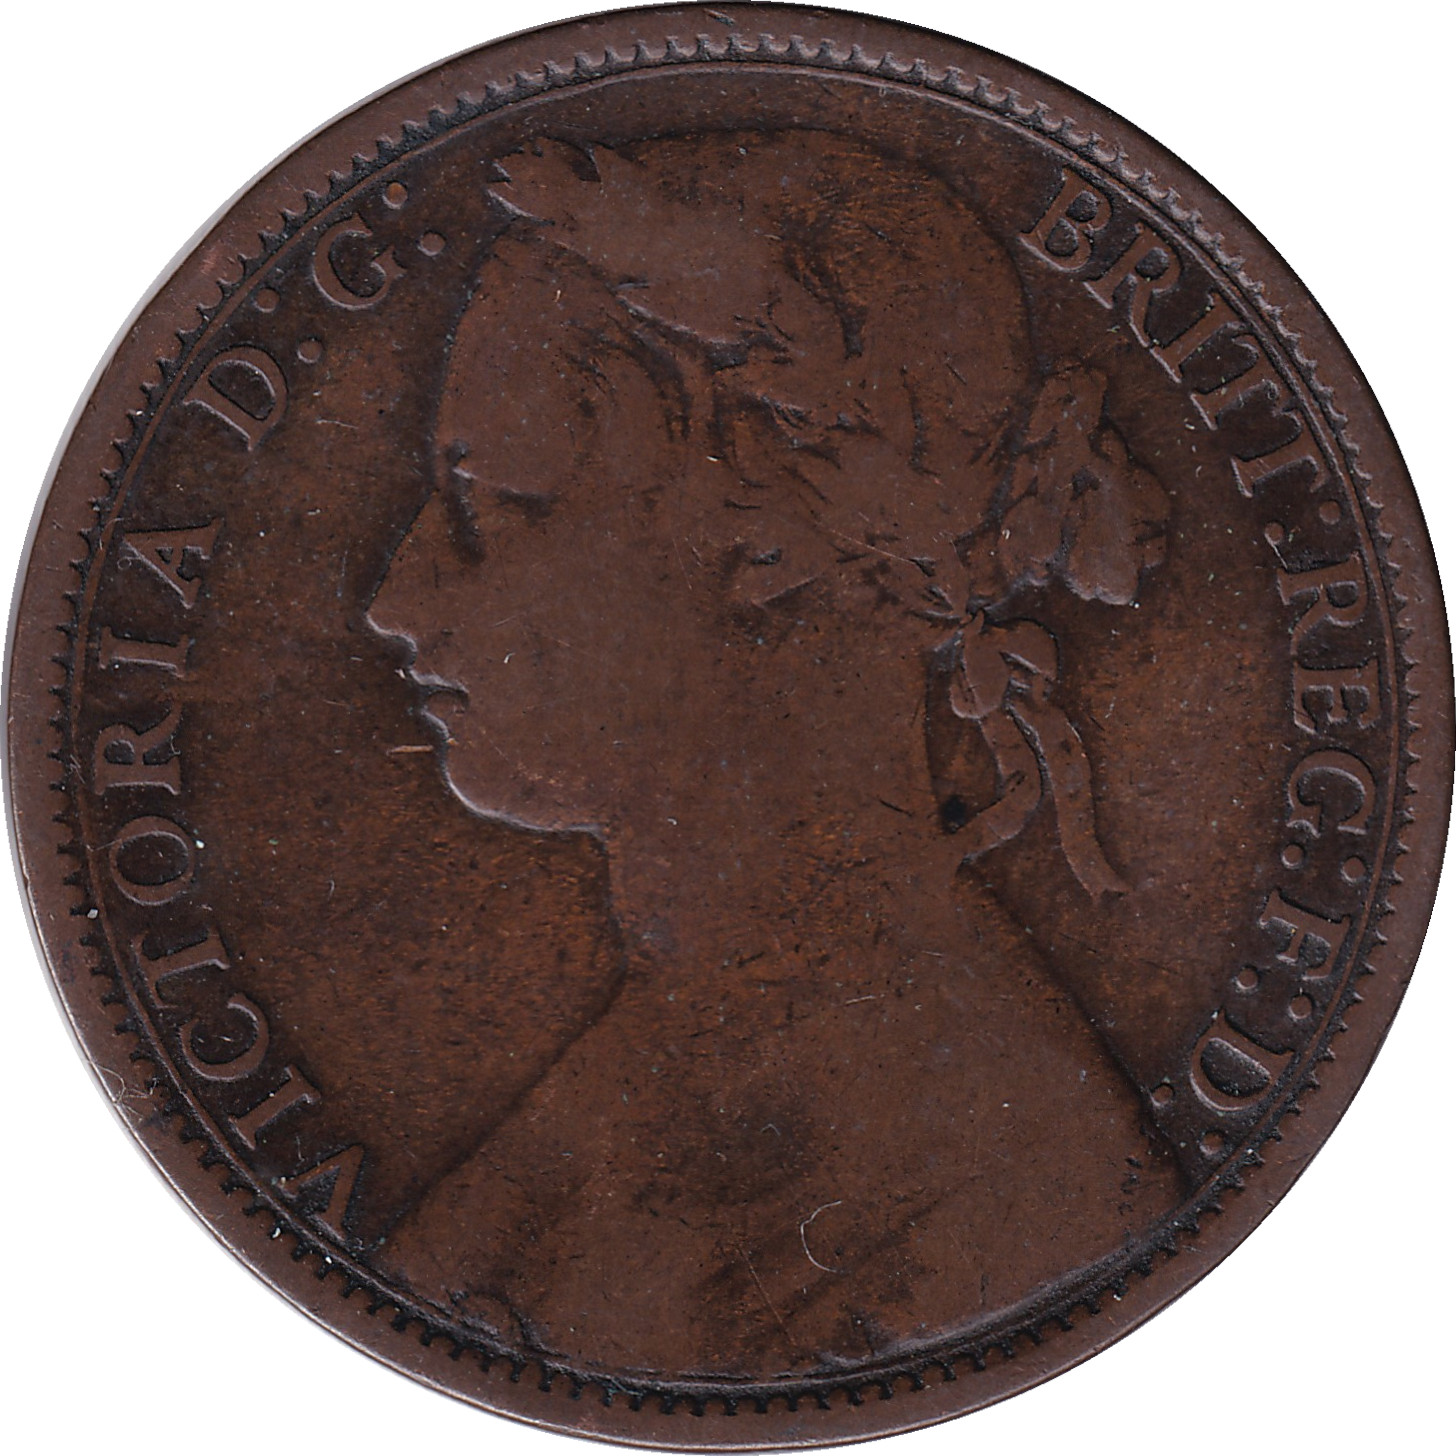 1 penny - Victoria - Buste mature